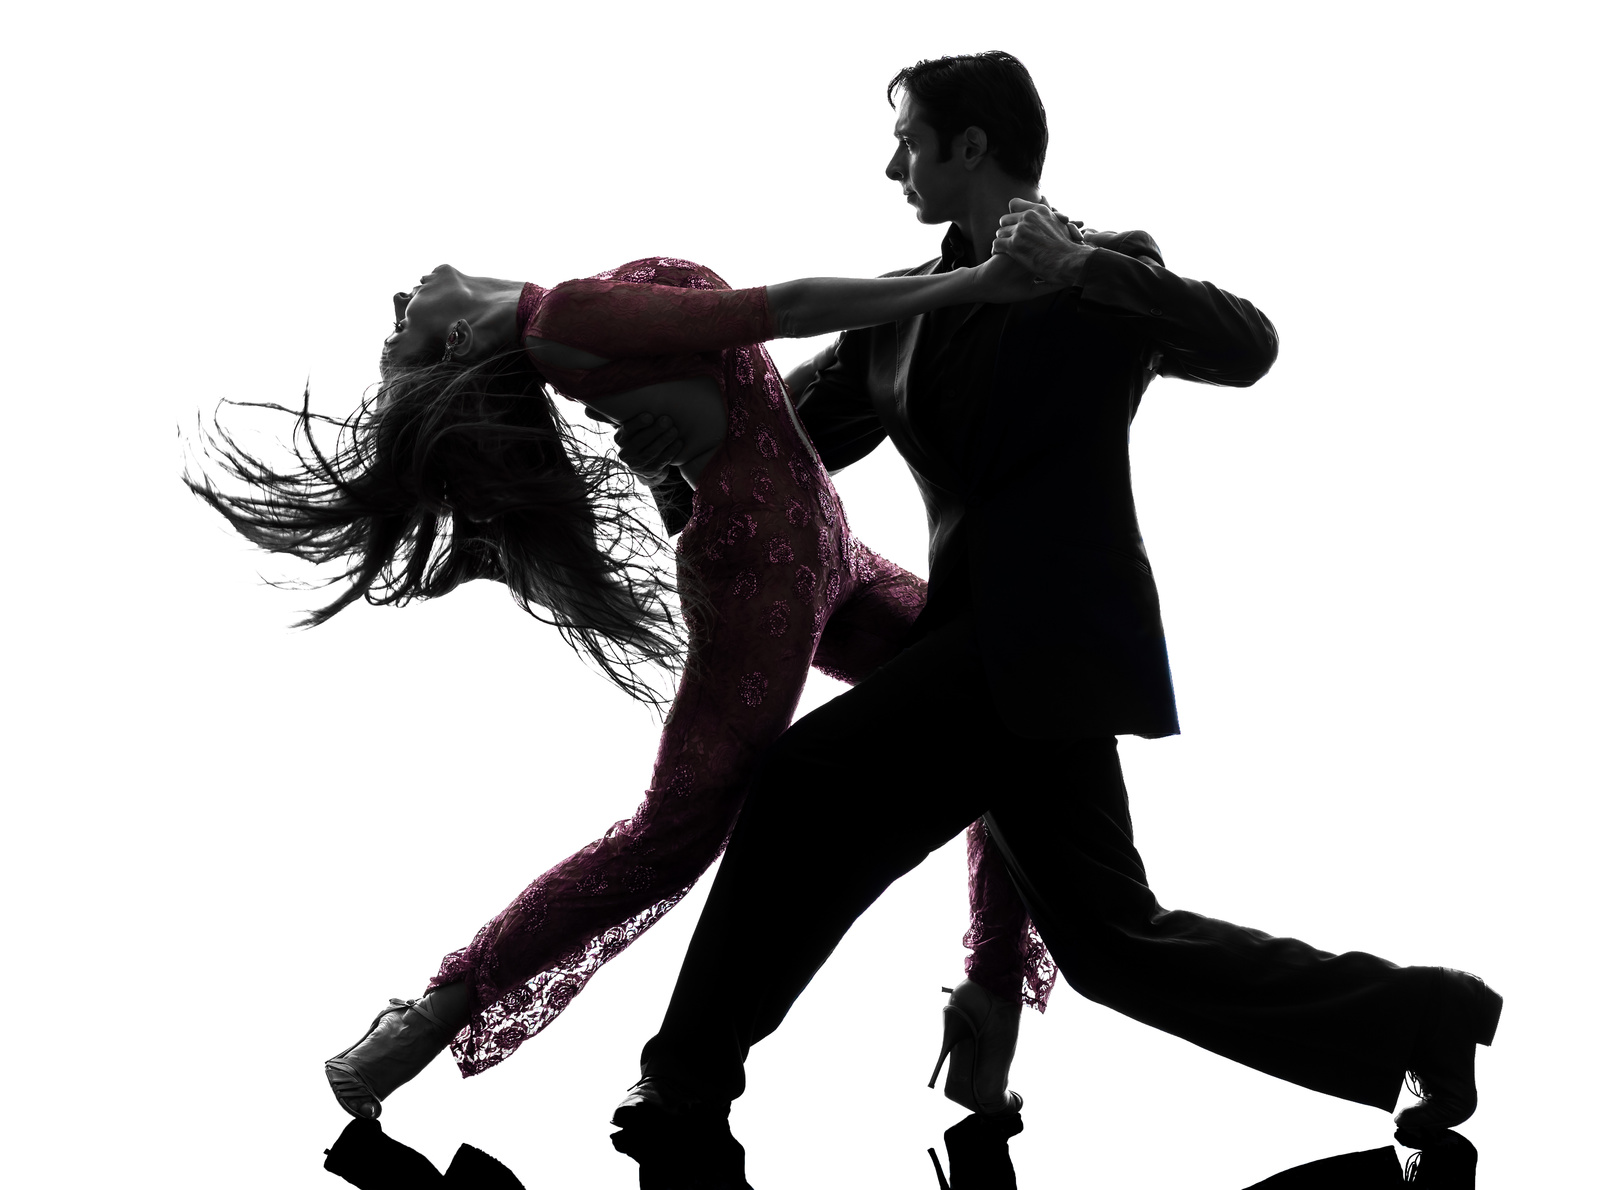 Man and woman dancing